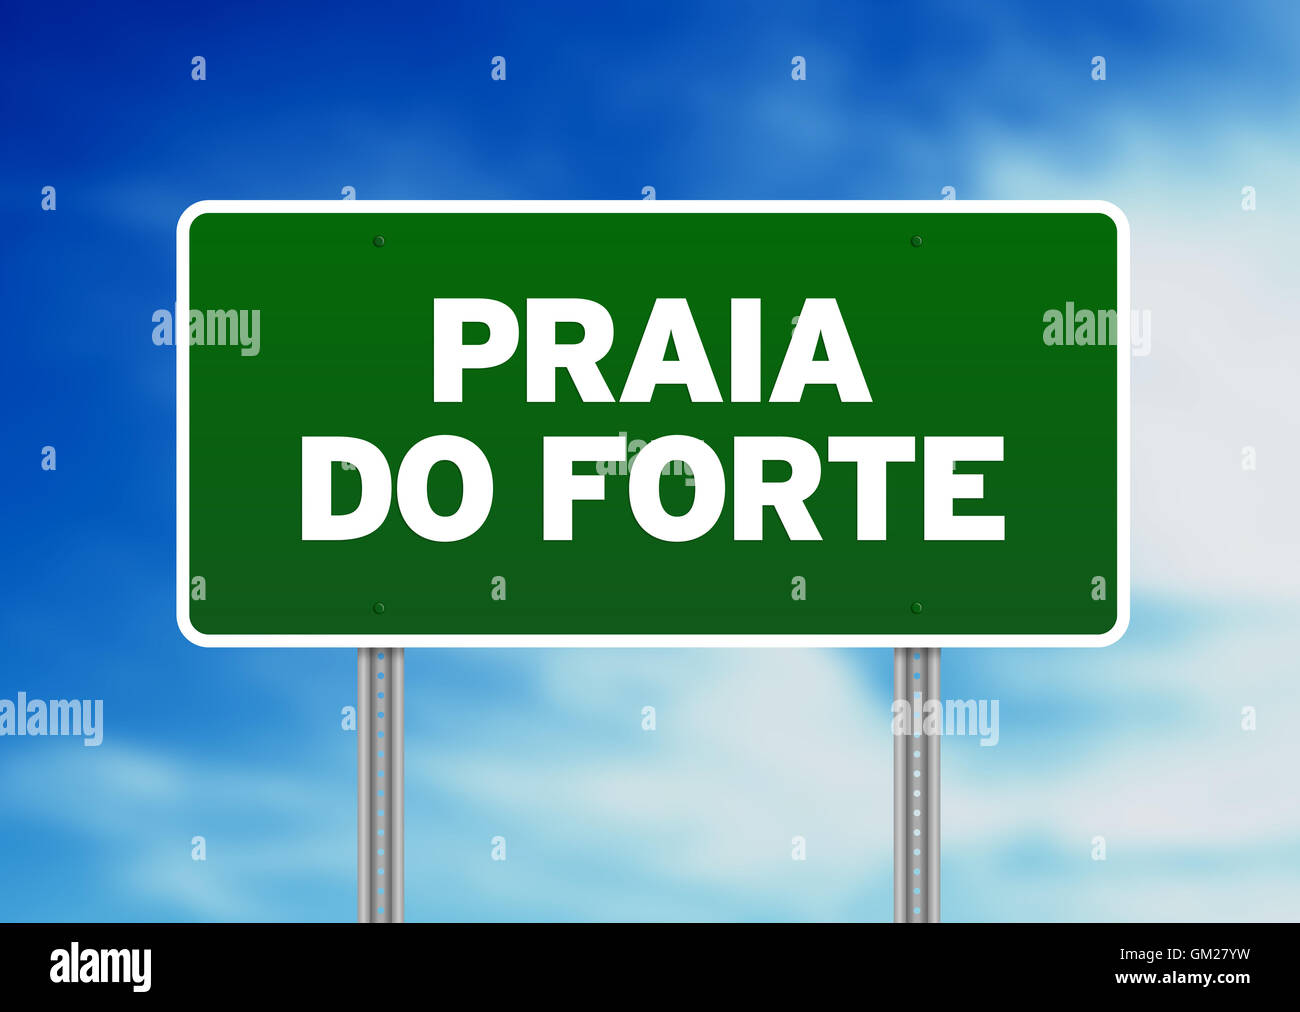 Green Road Sign - Praia do Forte, Brazil Stock Photo - Alamy